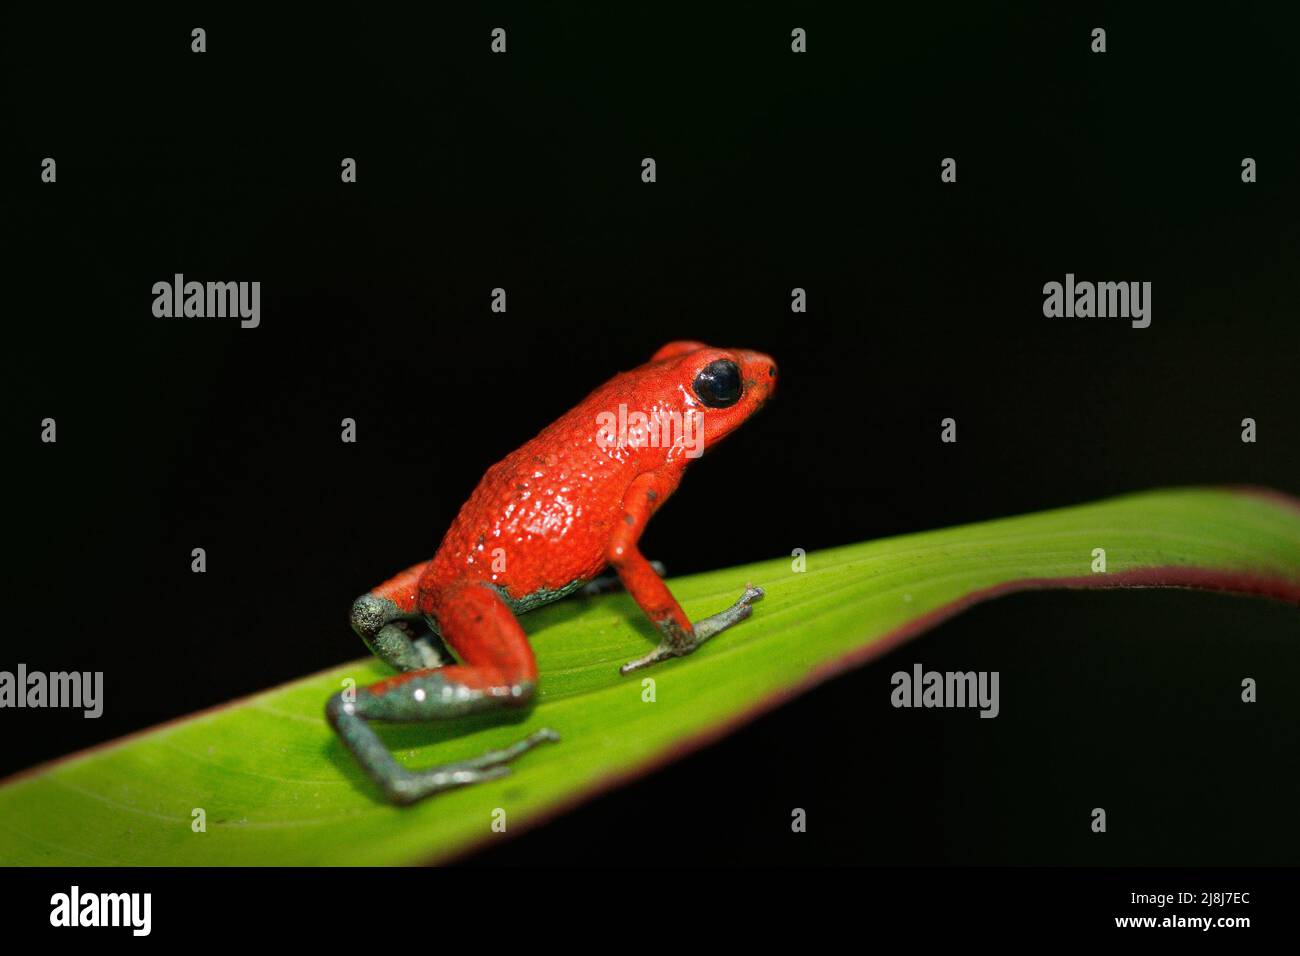 Rare Amphibien in the tropic forest. Red poisson frog Granular poison arrow frog, Dendrobates granuliferus, in the nature habitat, Costa Rica. Close-u Stock Photo